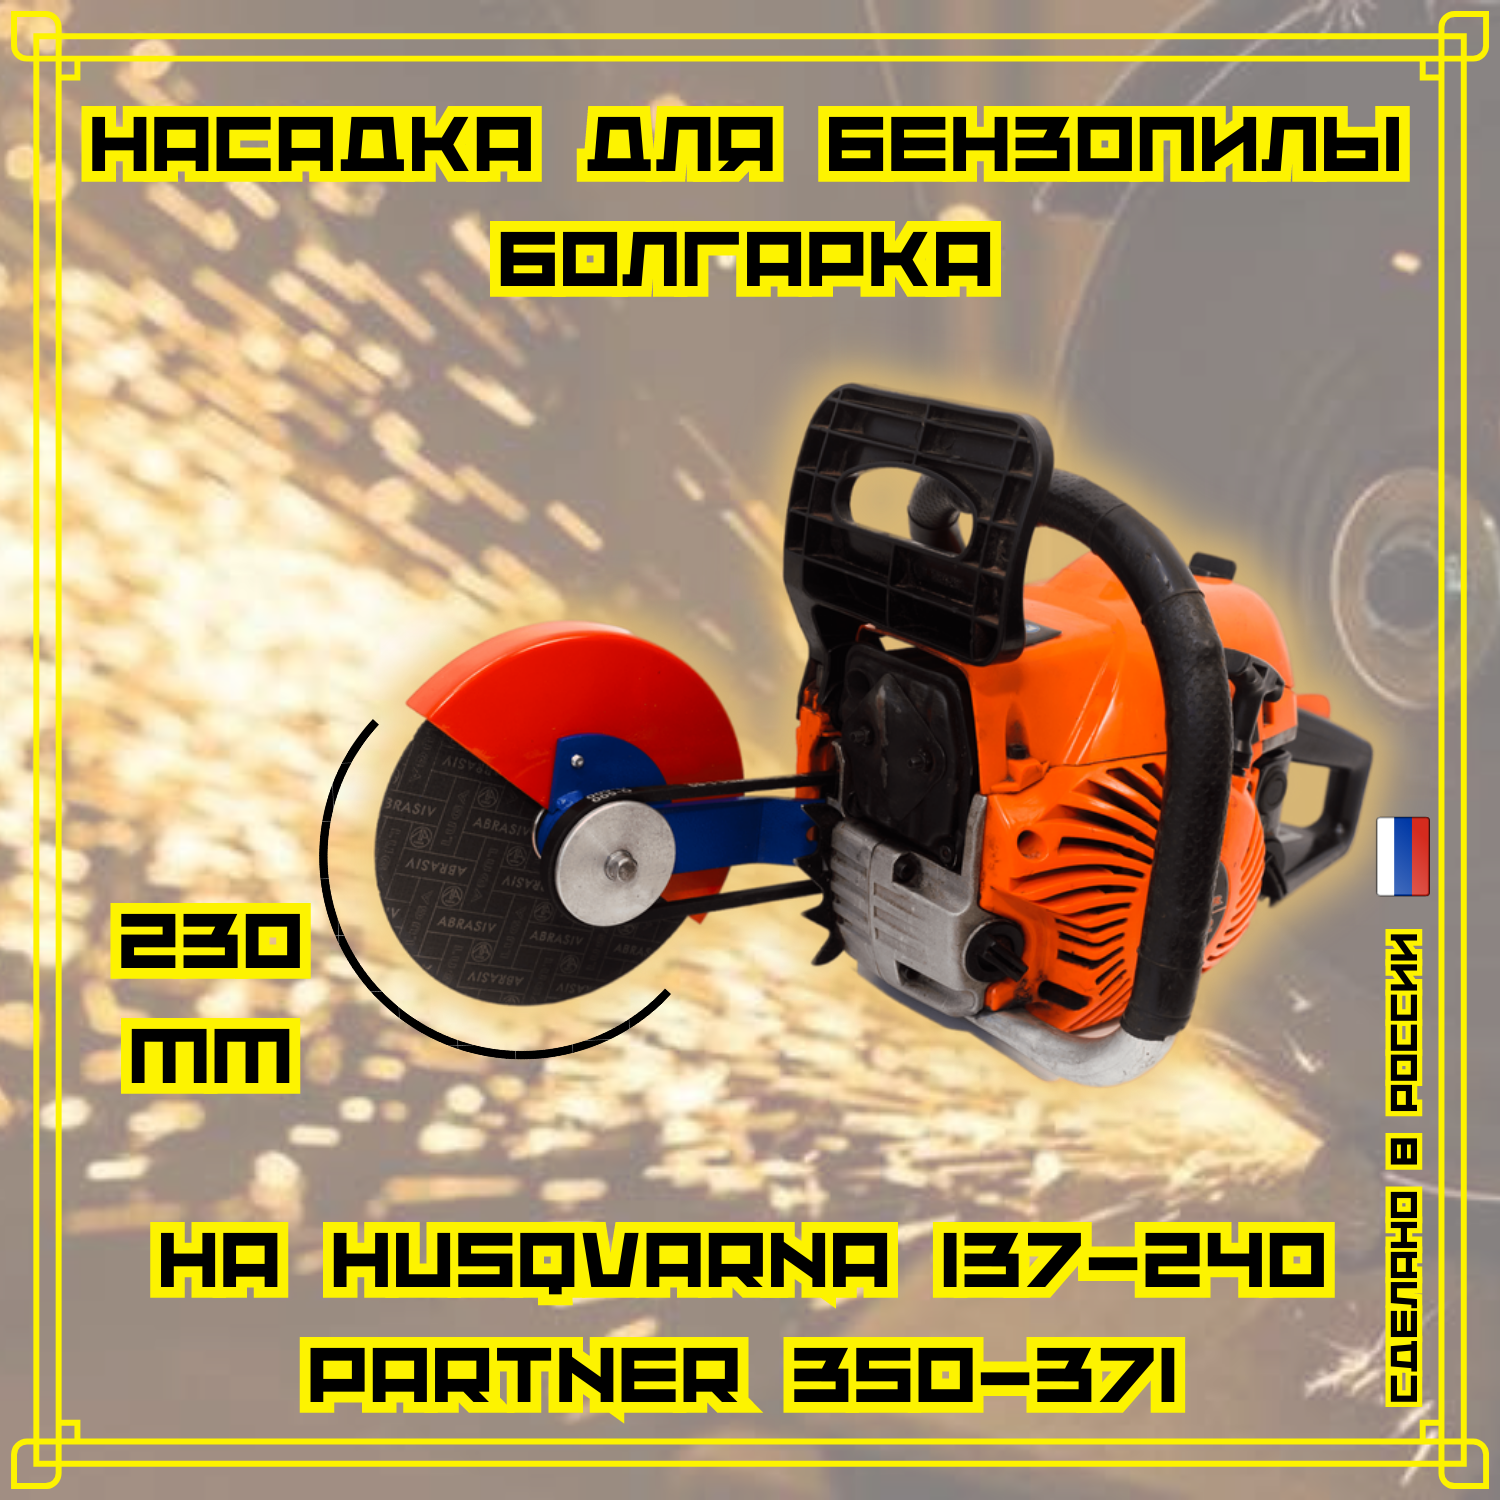 Насадка для бензопилы Болгарка D230 мм на Husqvarna 137-240; Partner350-371.